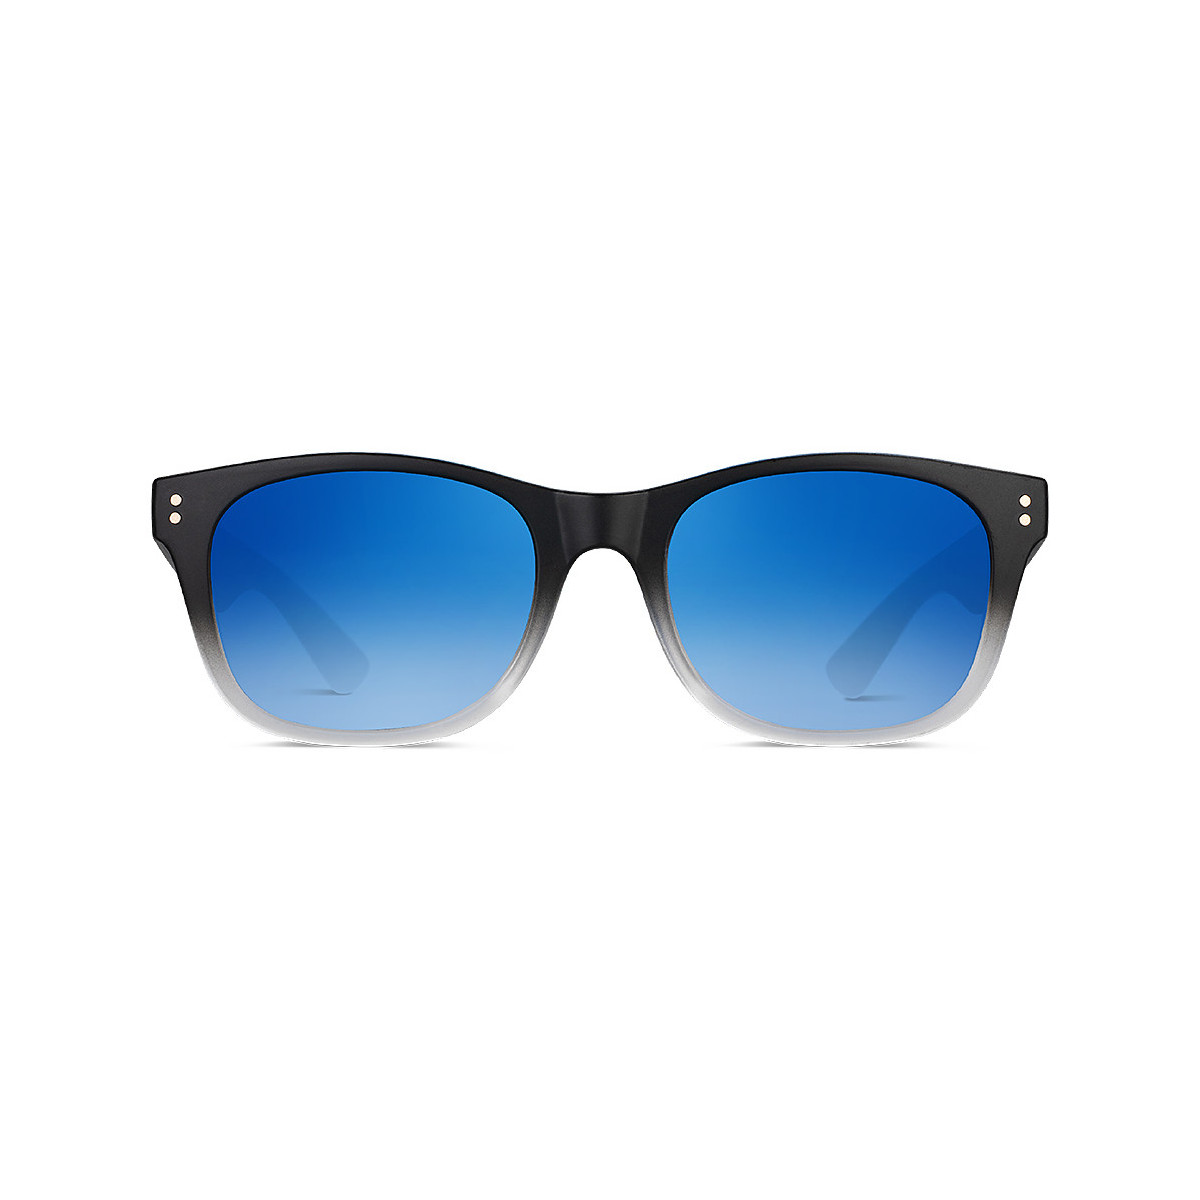 Relojes & Joyas Gafas de sol Smooder IDOL Azul